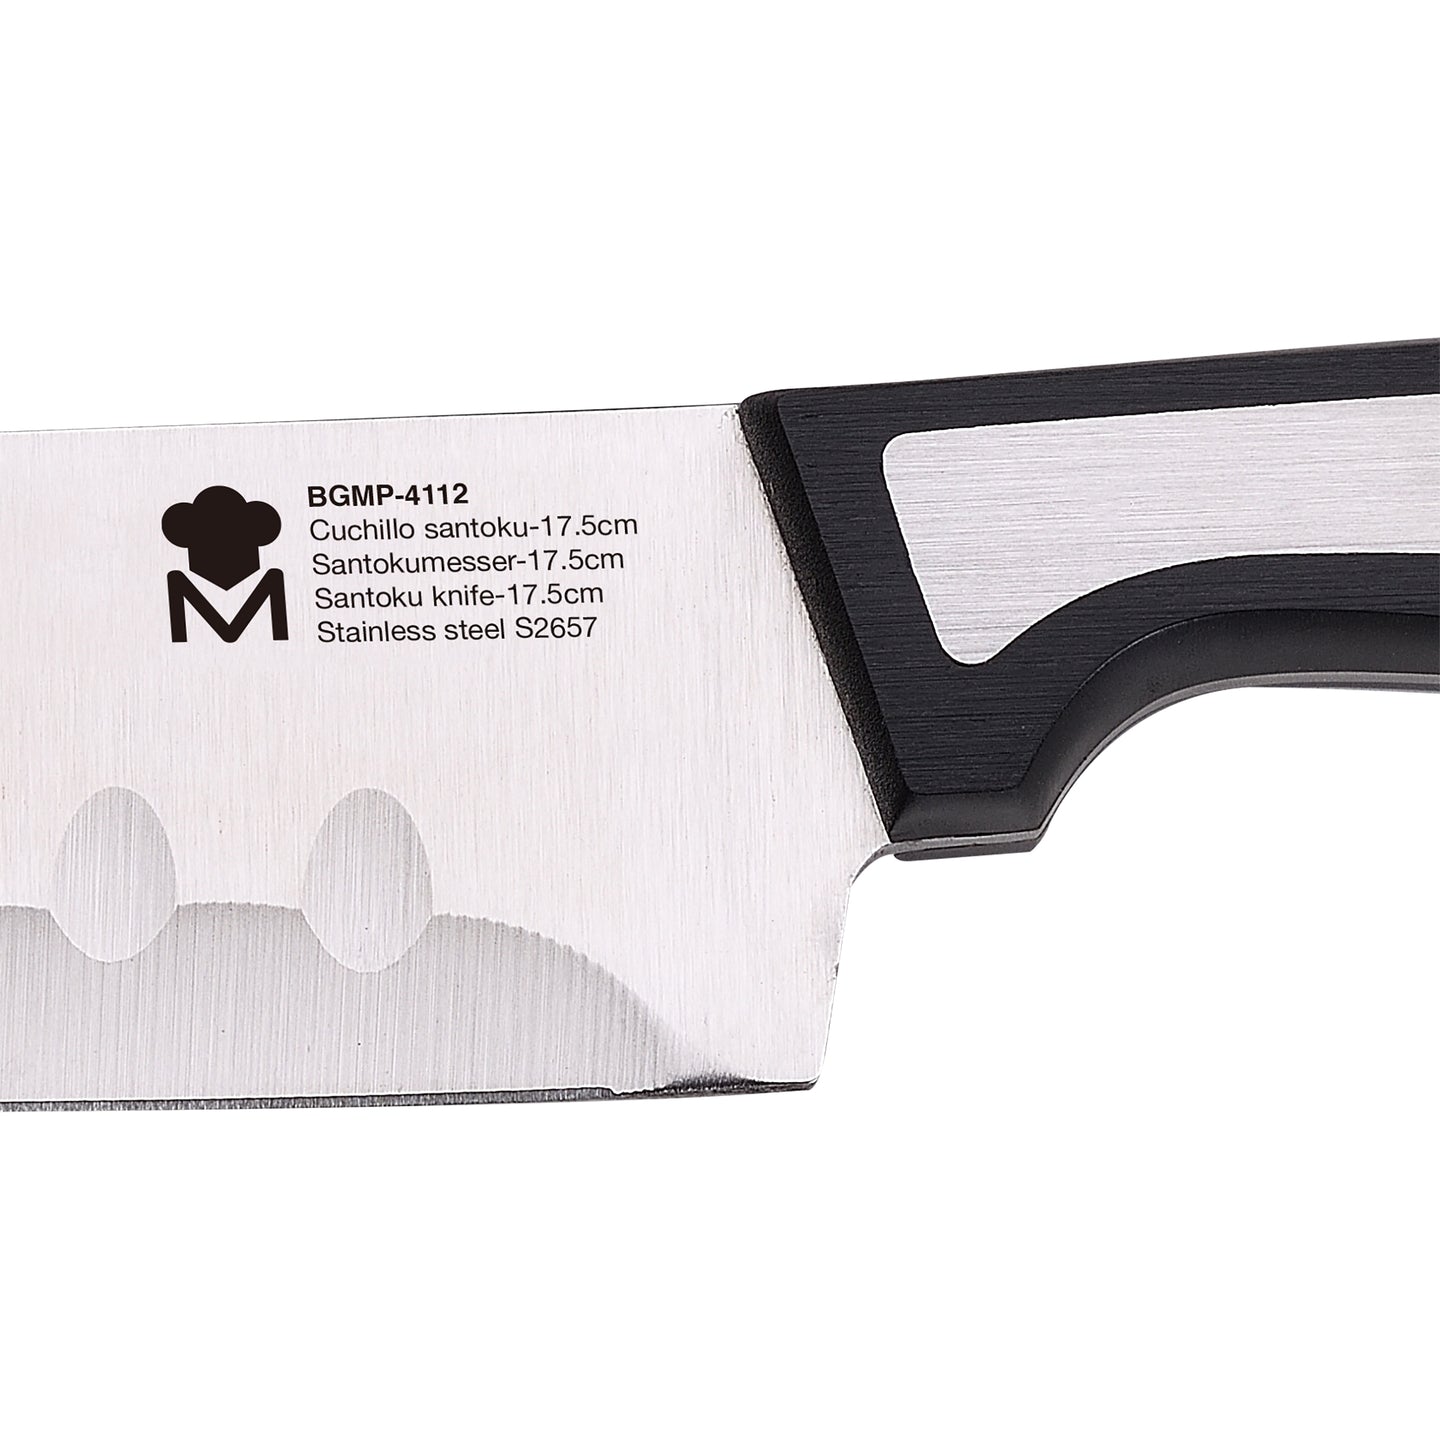 Cuchillo santoku MasterPRO 17.5 cm - Sharp (2)